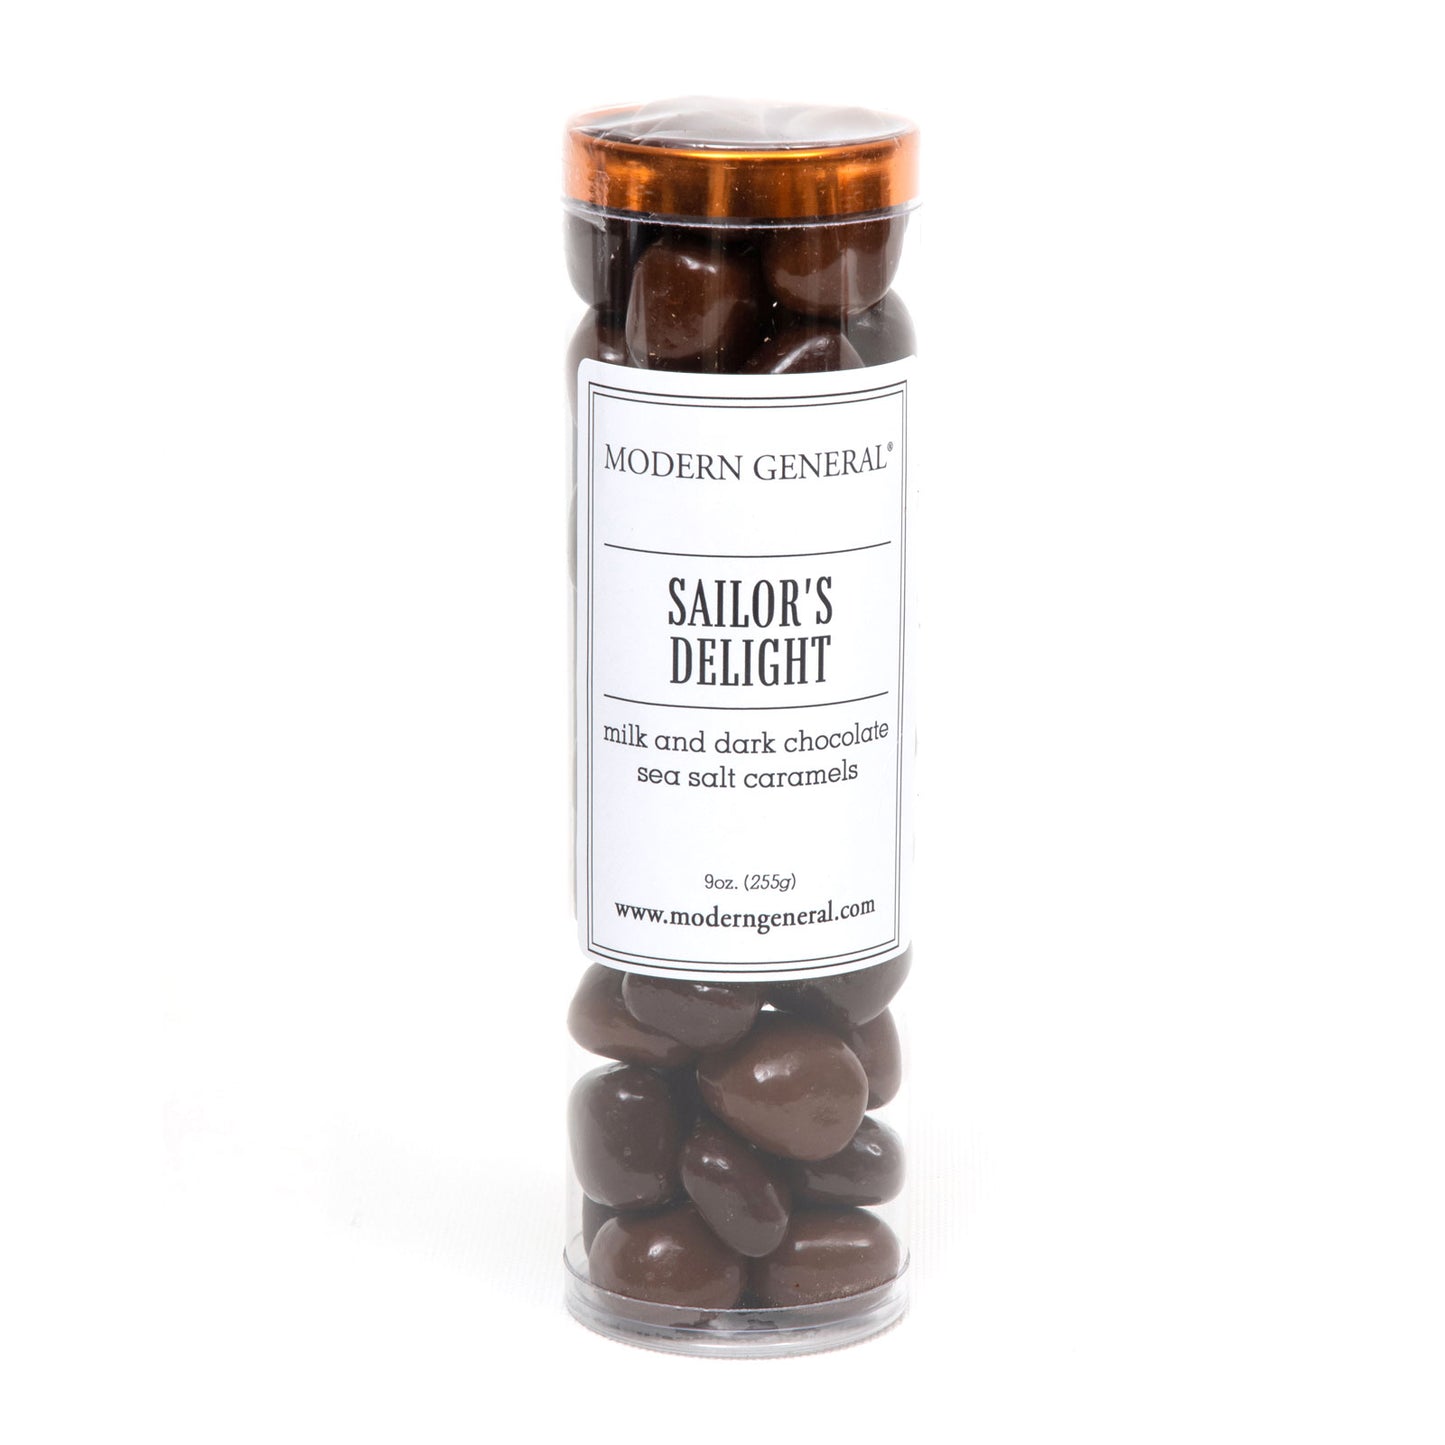 "Sailor's Delight" Salted Caramels